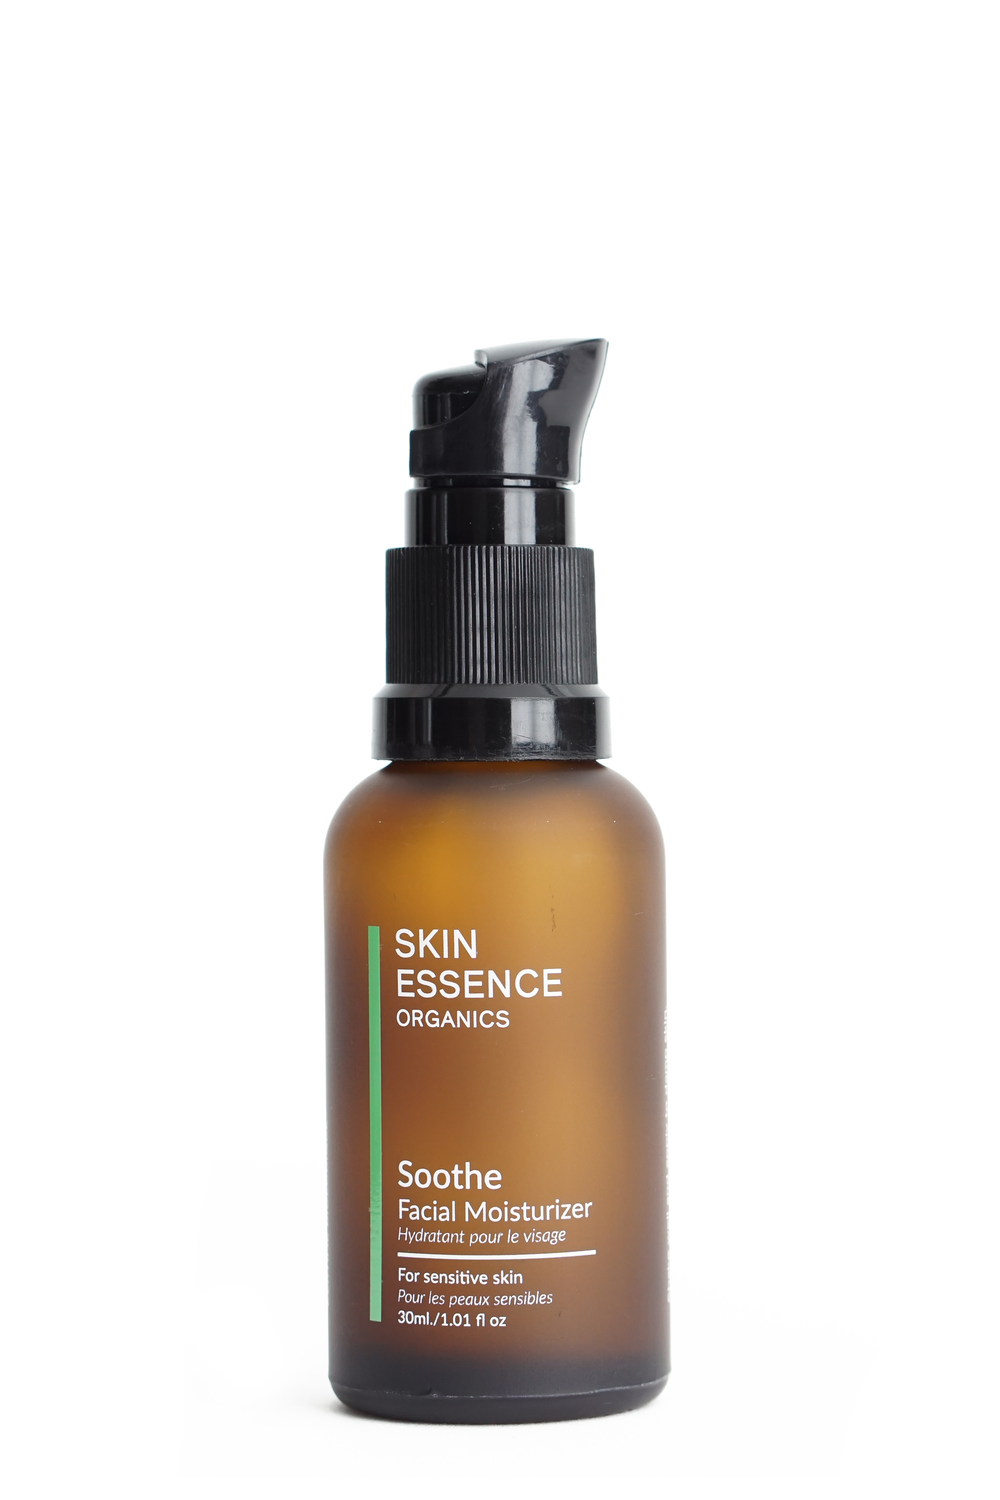 Skin Essence Organics Soothe Facial Moisturizer 30mL